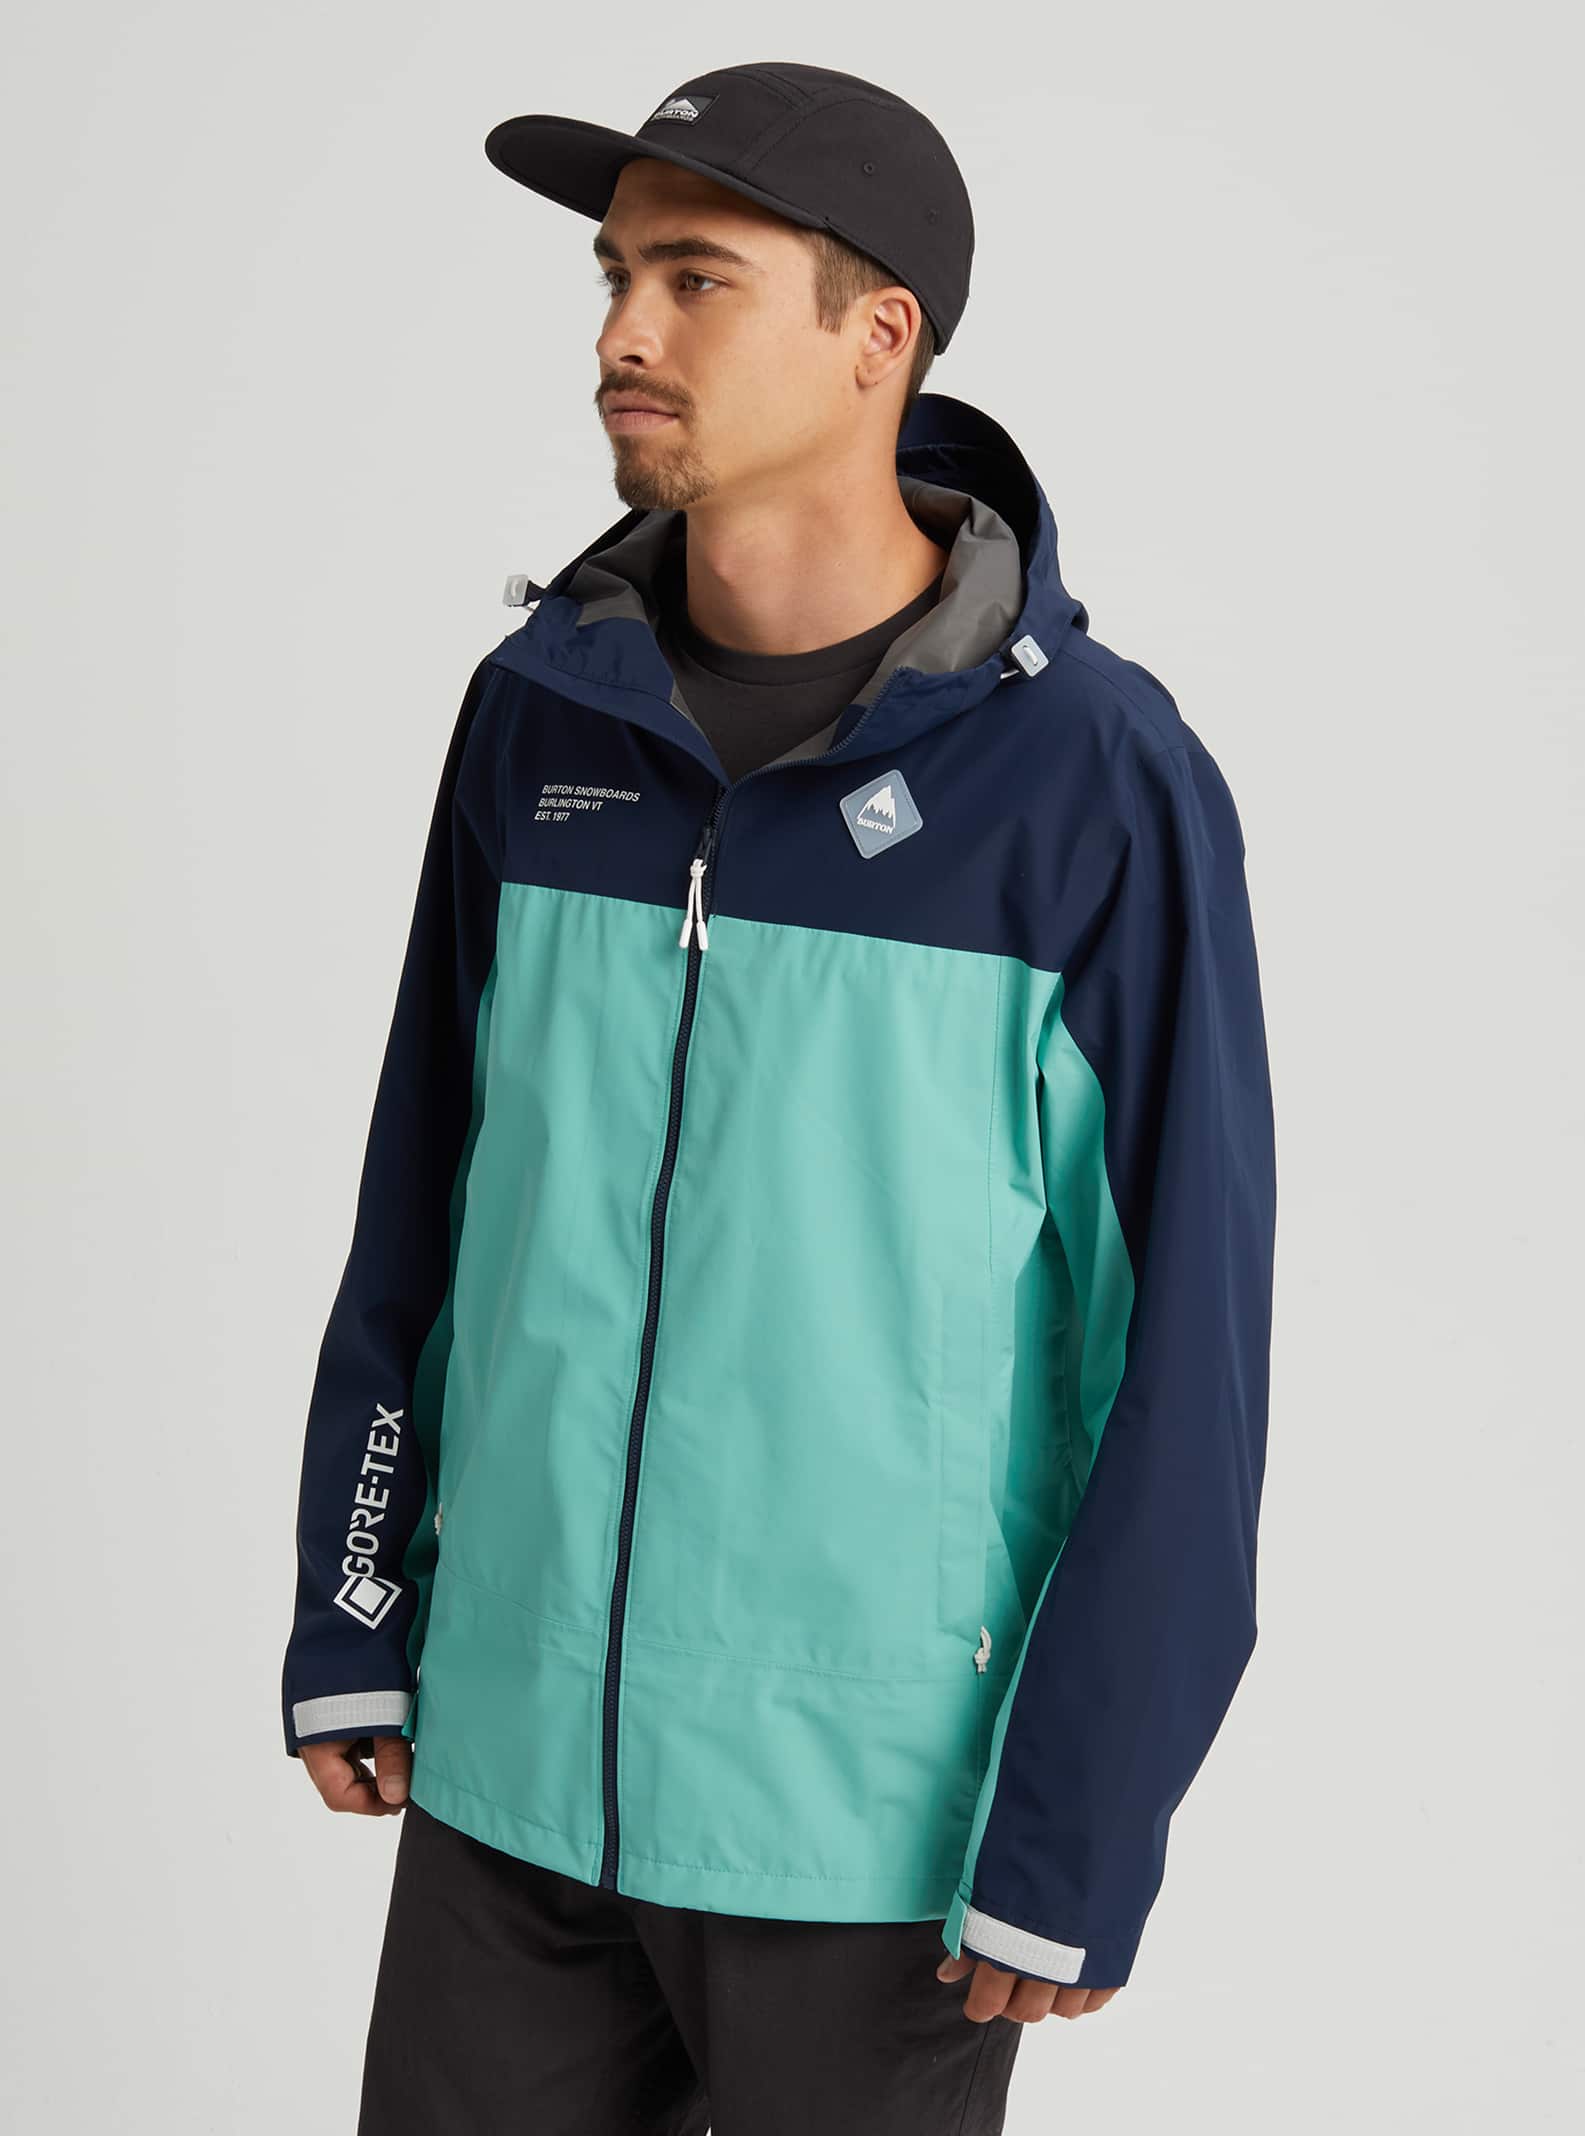 Men's Burton GORE-TEX Packrite Rain Jacket | Burton.com Spring 